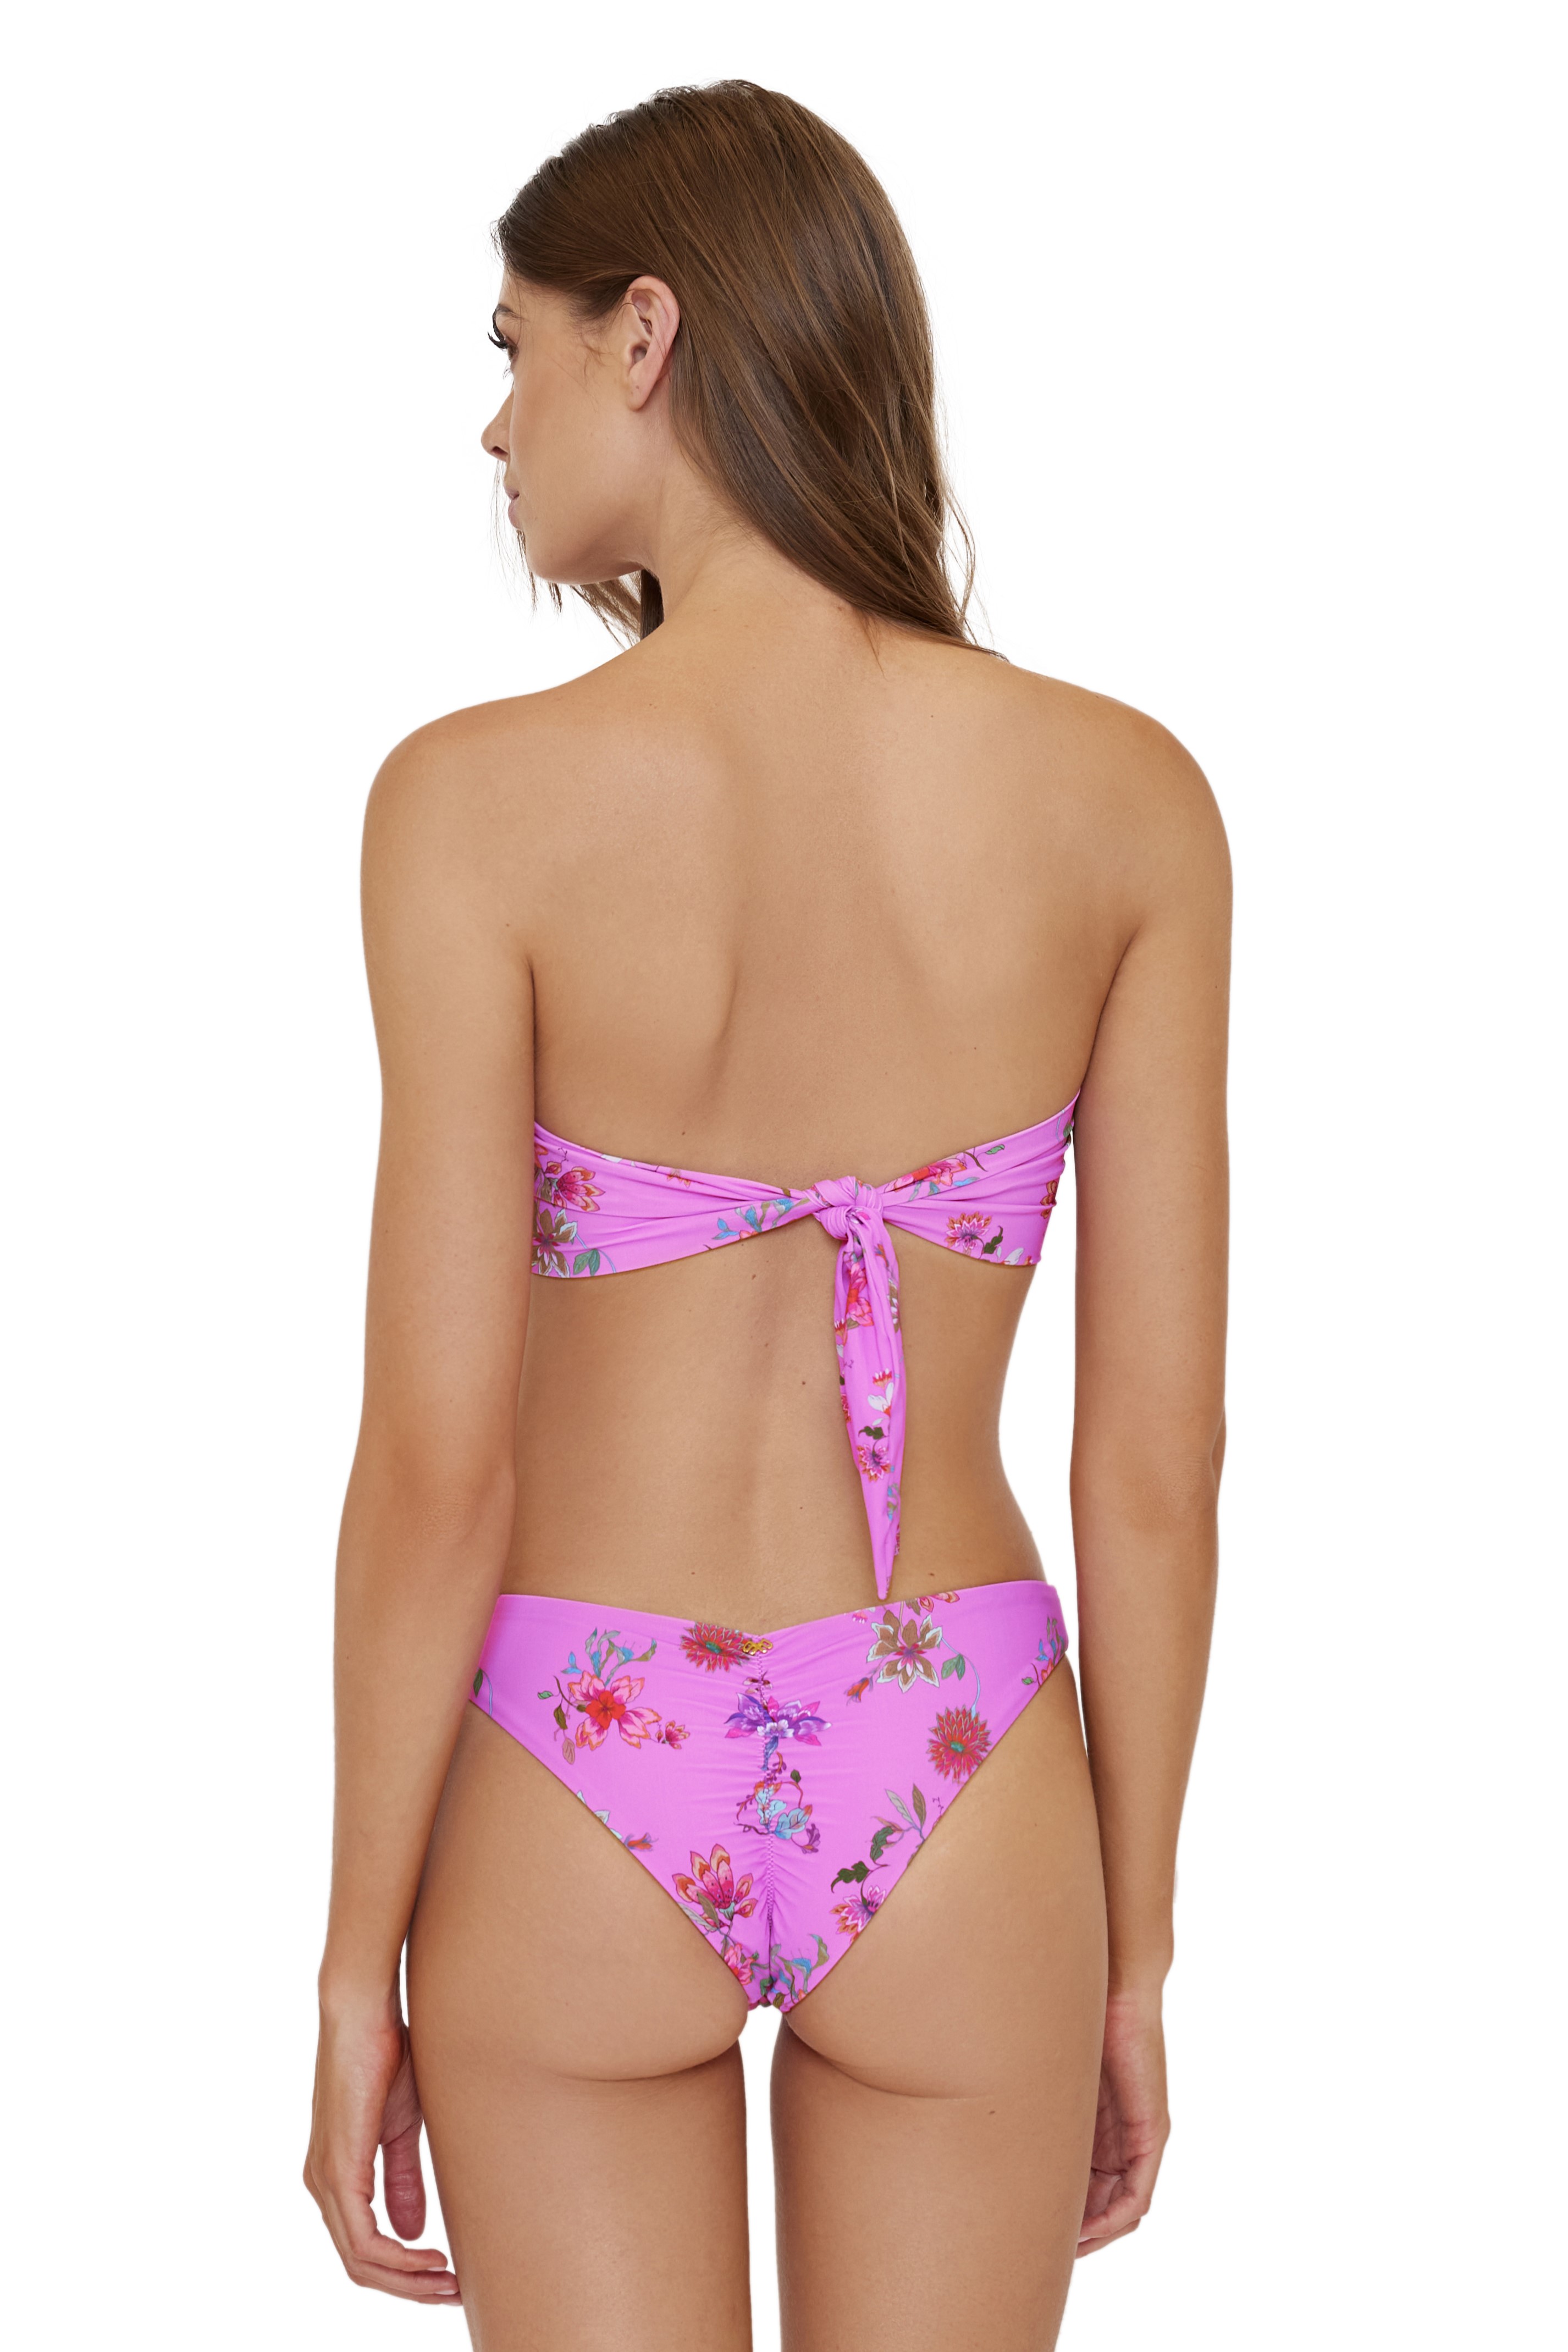 Pilyq Swim Garden Pink Ruffle Bikini